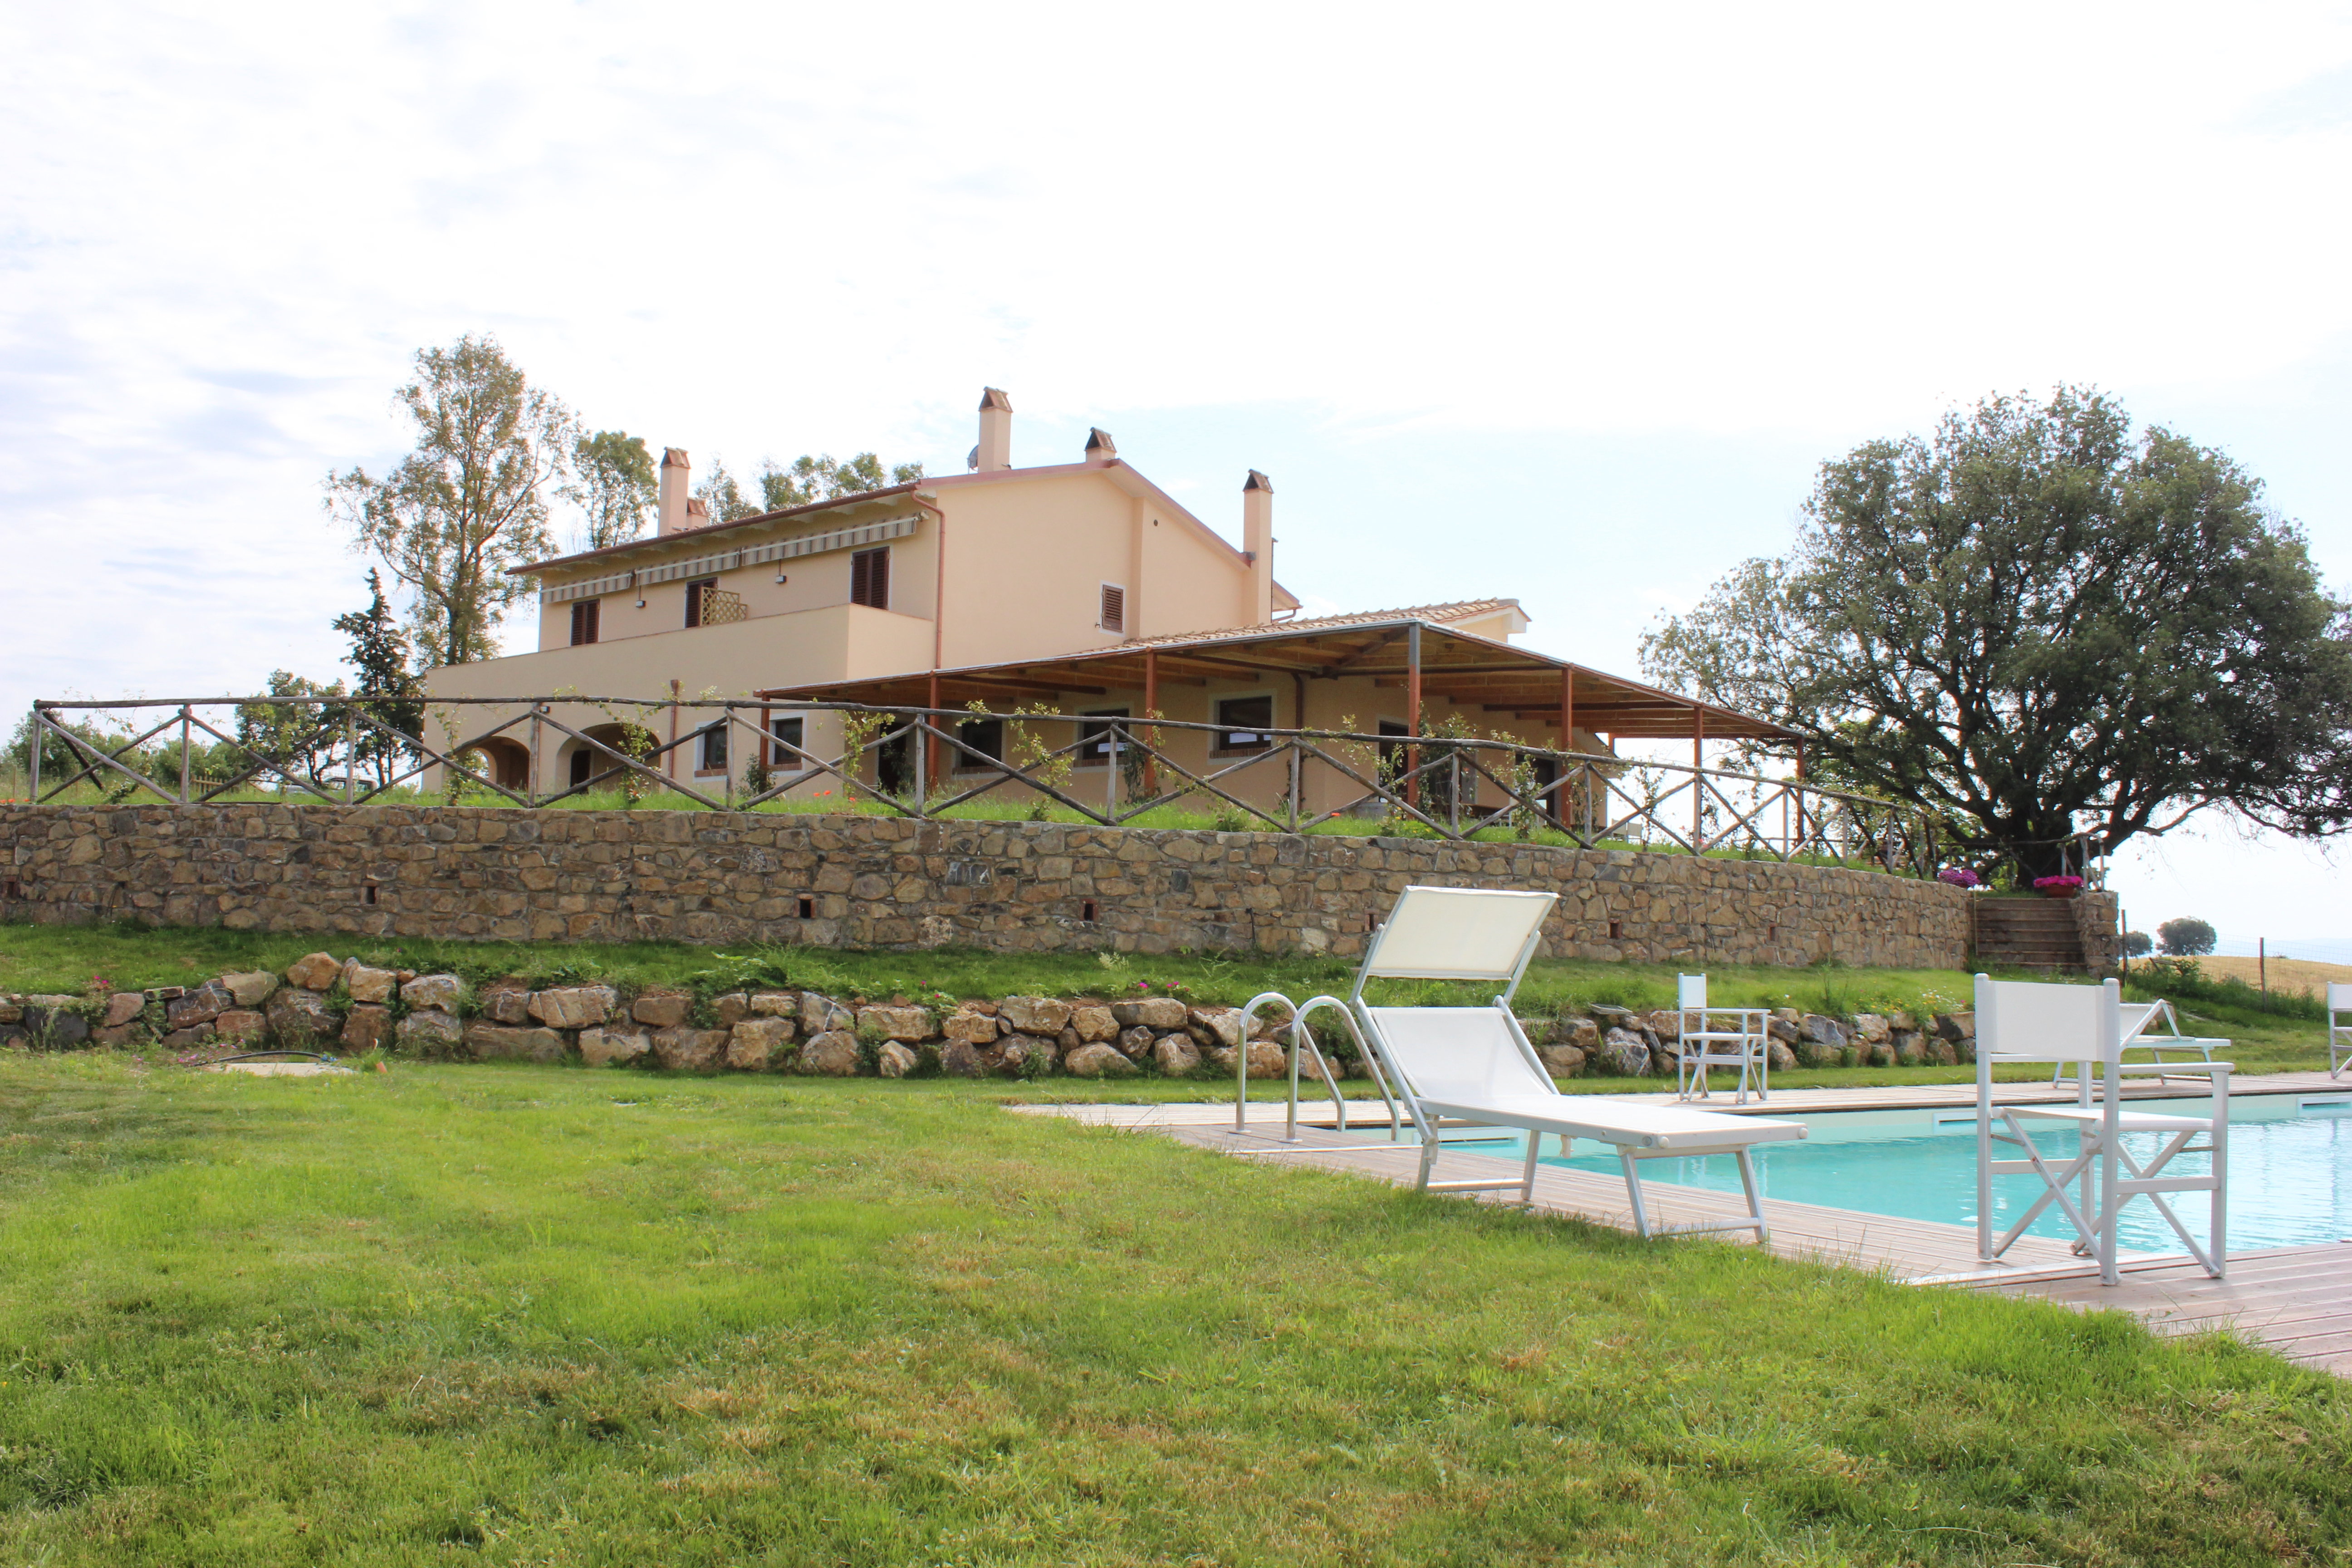 Farmhouse Anichino, pool, countryside of Maremma and good taste